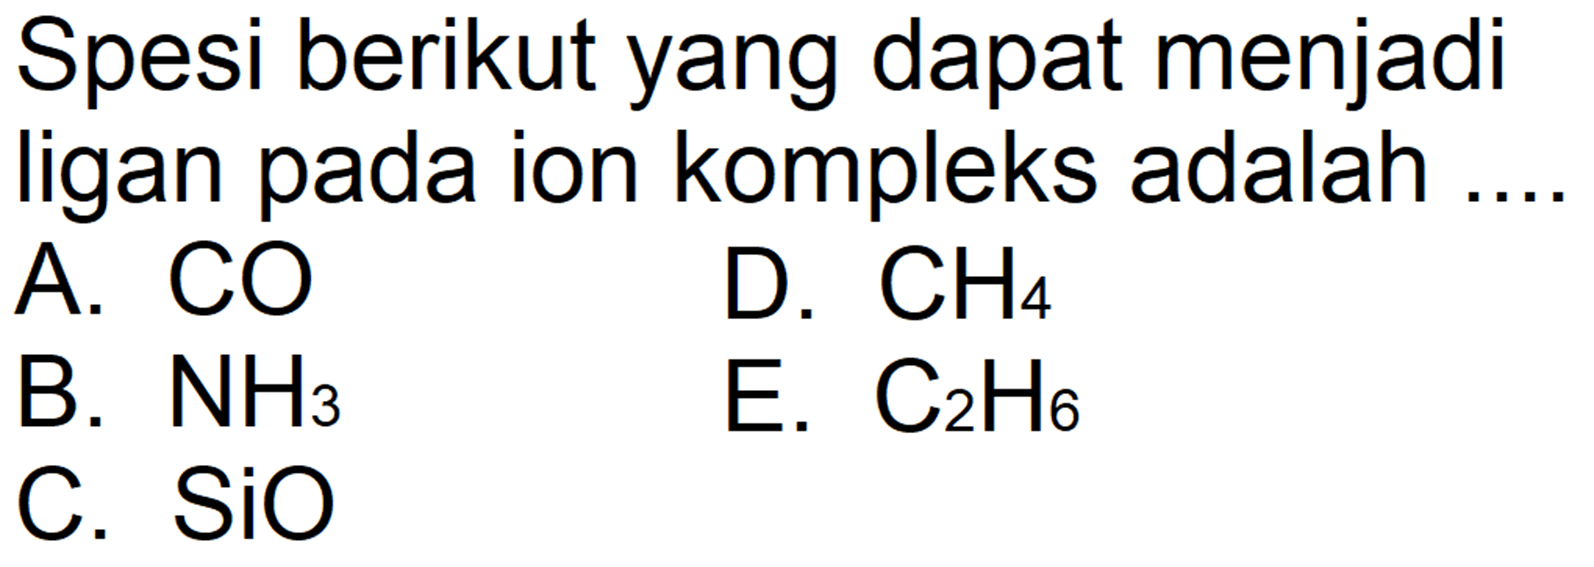 Spesi berikut yang dapat menjadi ligan pada ion kompleks adalah ...
A. CO
D. CH4 
B. NH3 
E. C2H6 
C. SiO 